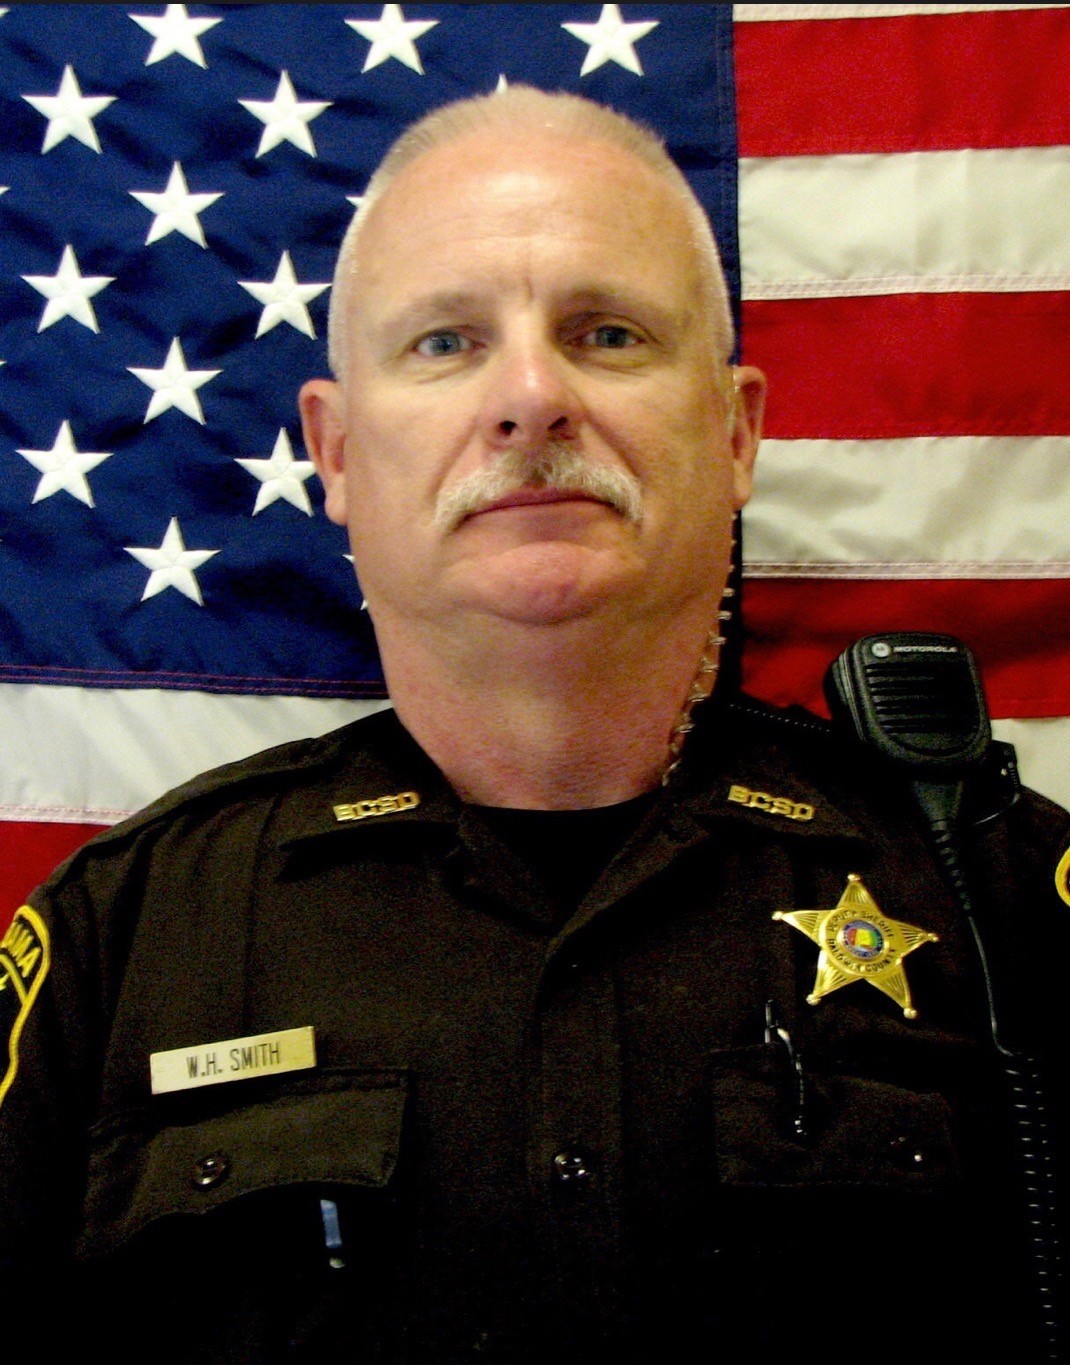 Deputy Bill Smith